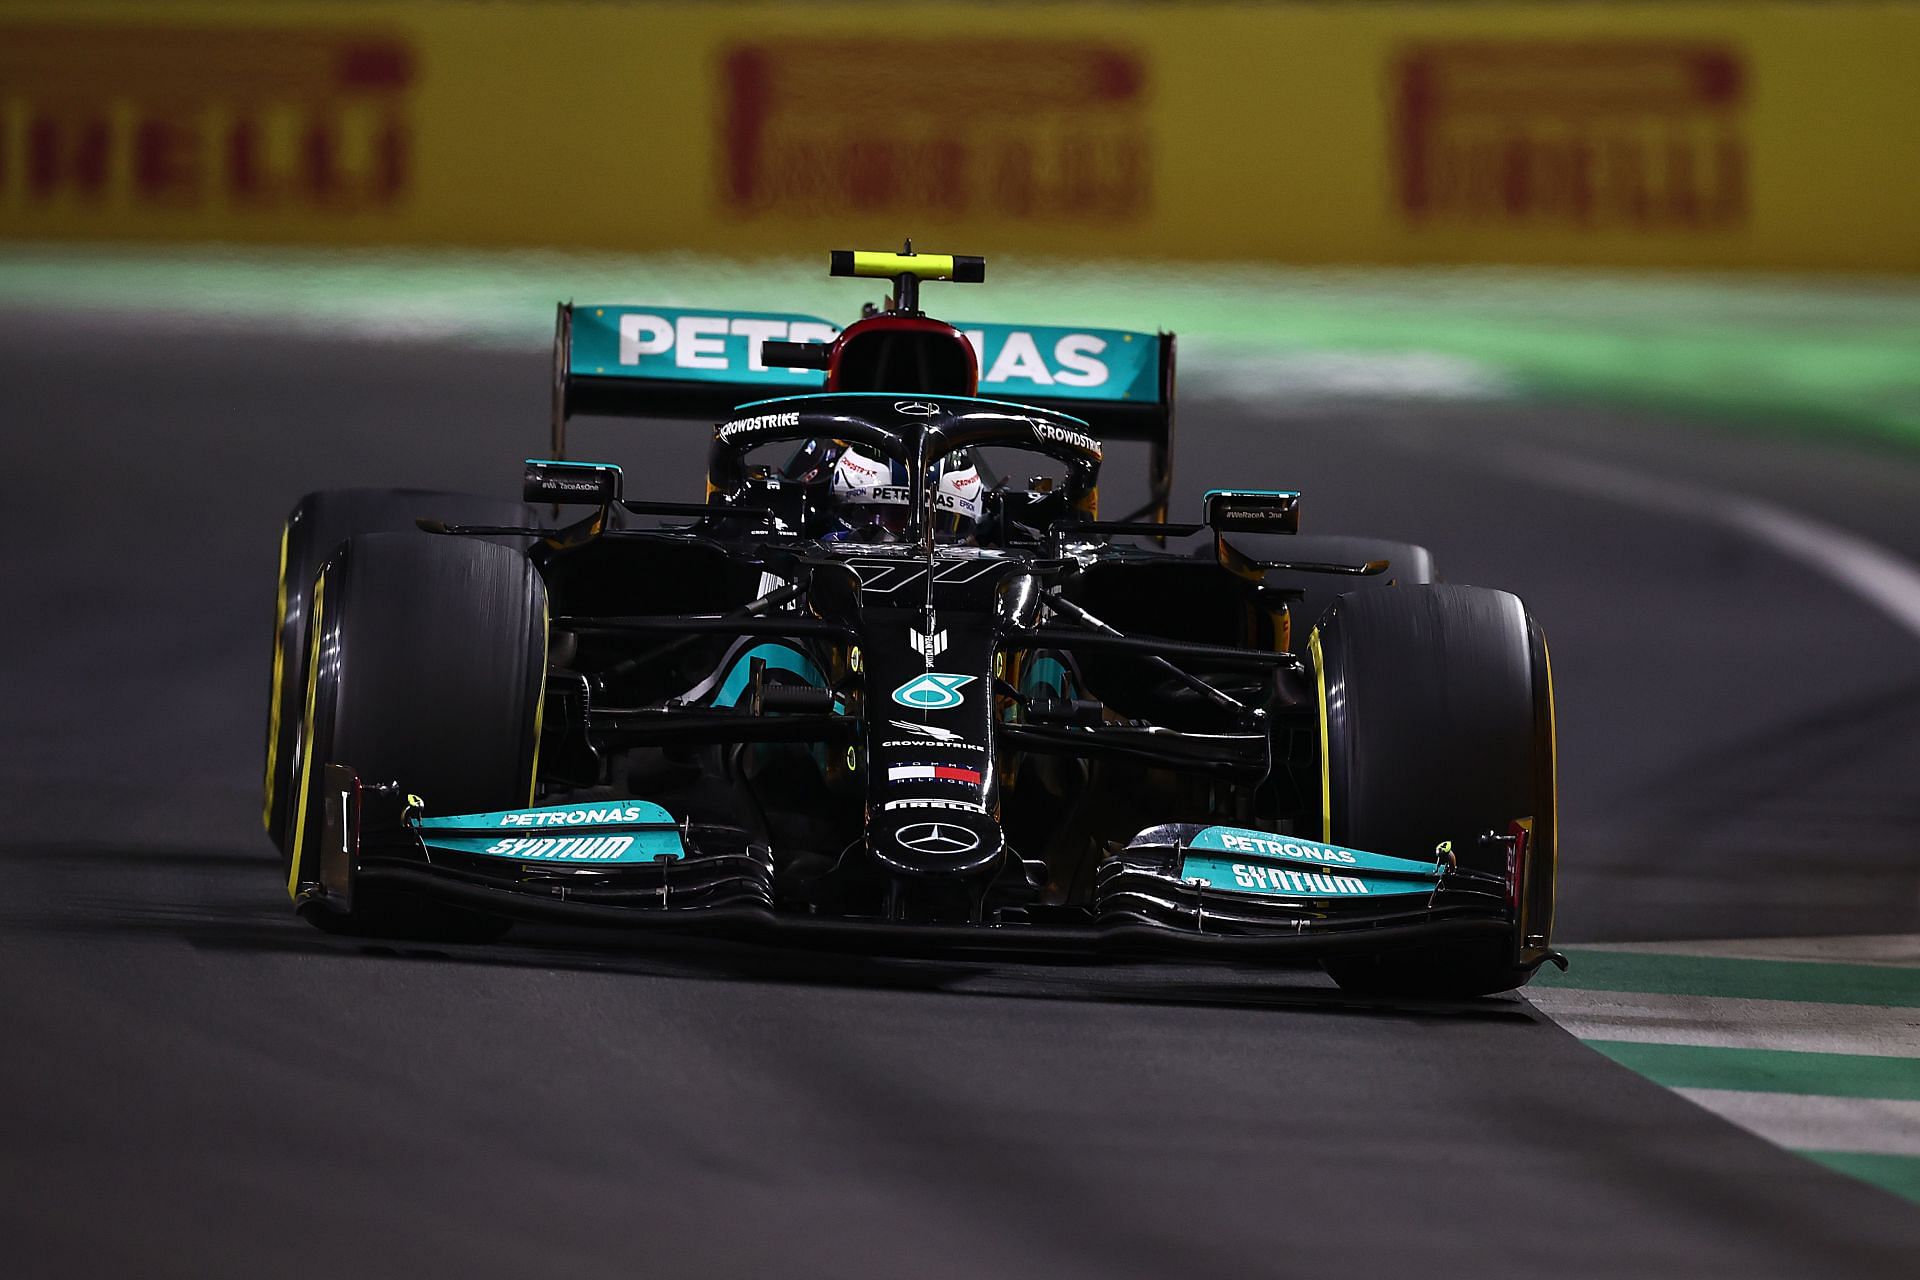 F1 Grand Prix of Saudi Arabia - Lewis Hamilton leads the pack at the Jeddah Corniche Circuit.